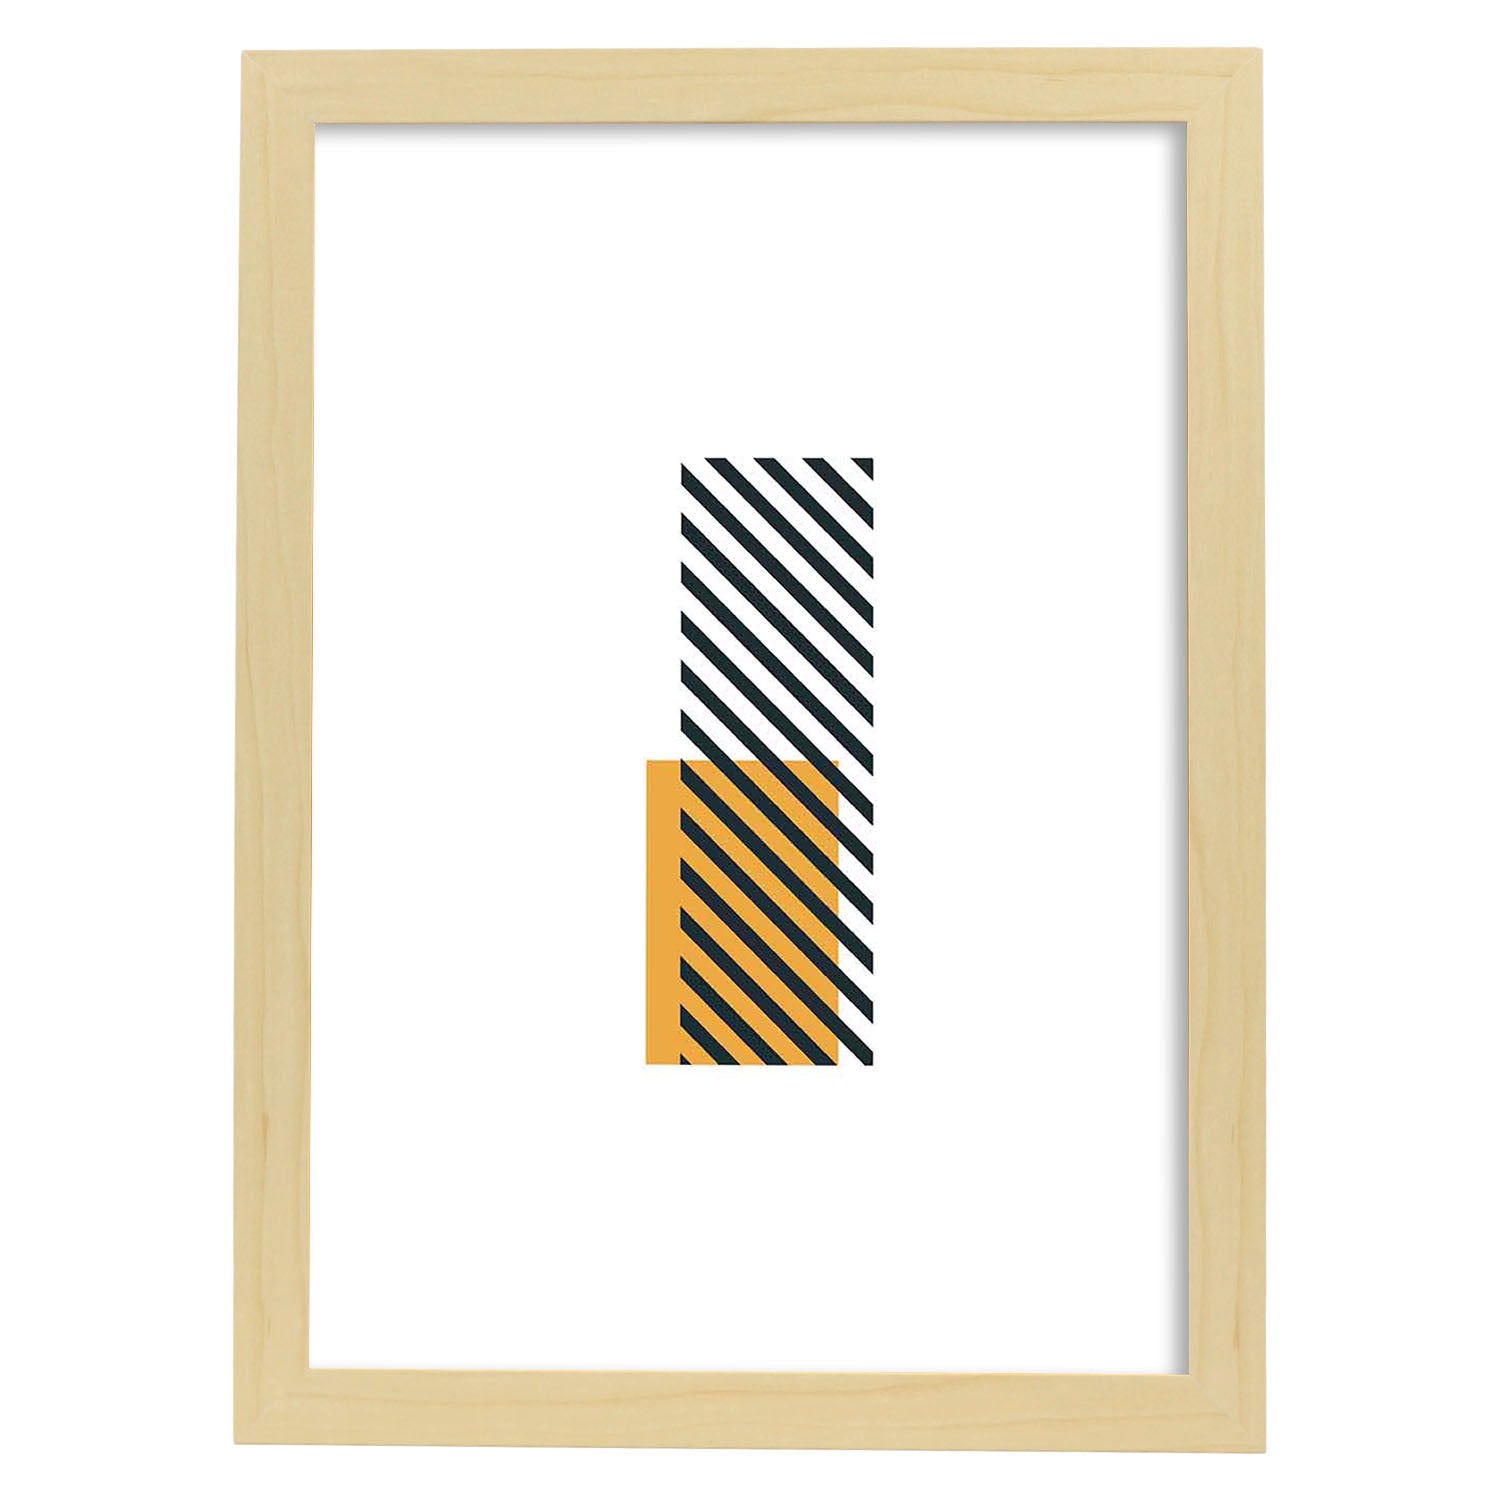 Poster de letra I. Lámina estilo Geometria con imágenes del alfabeto.-Artwork-Nacnic-A4-Marco Madera clara-Nacnic Estudio SL